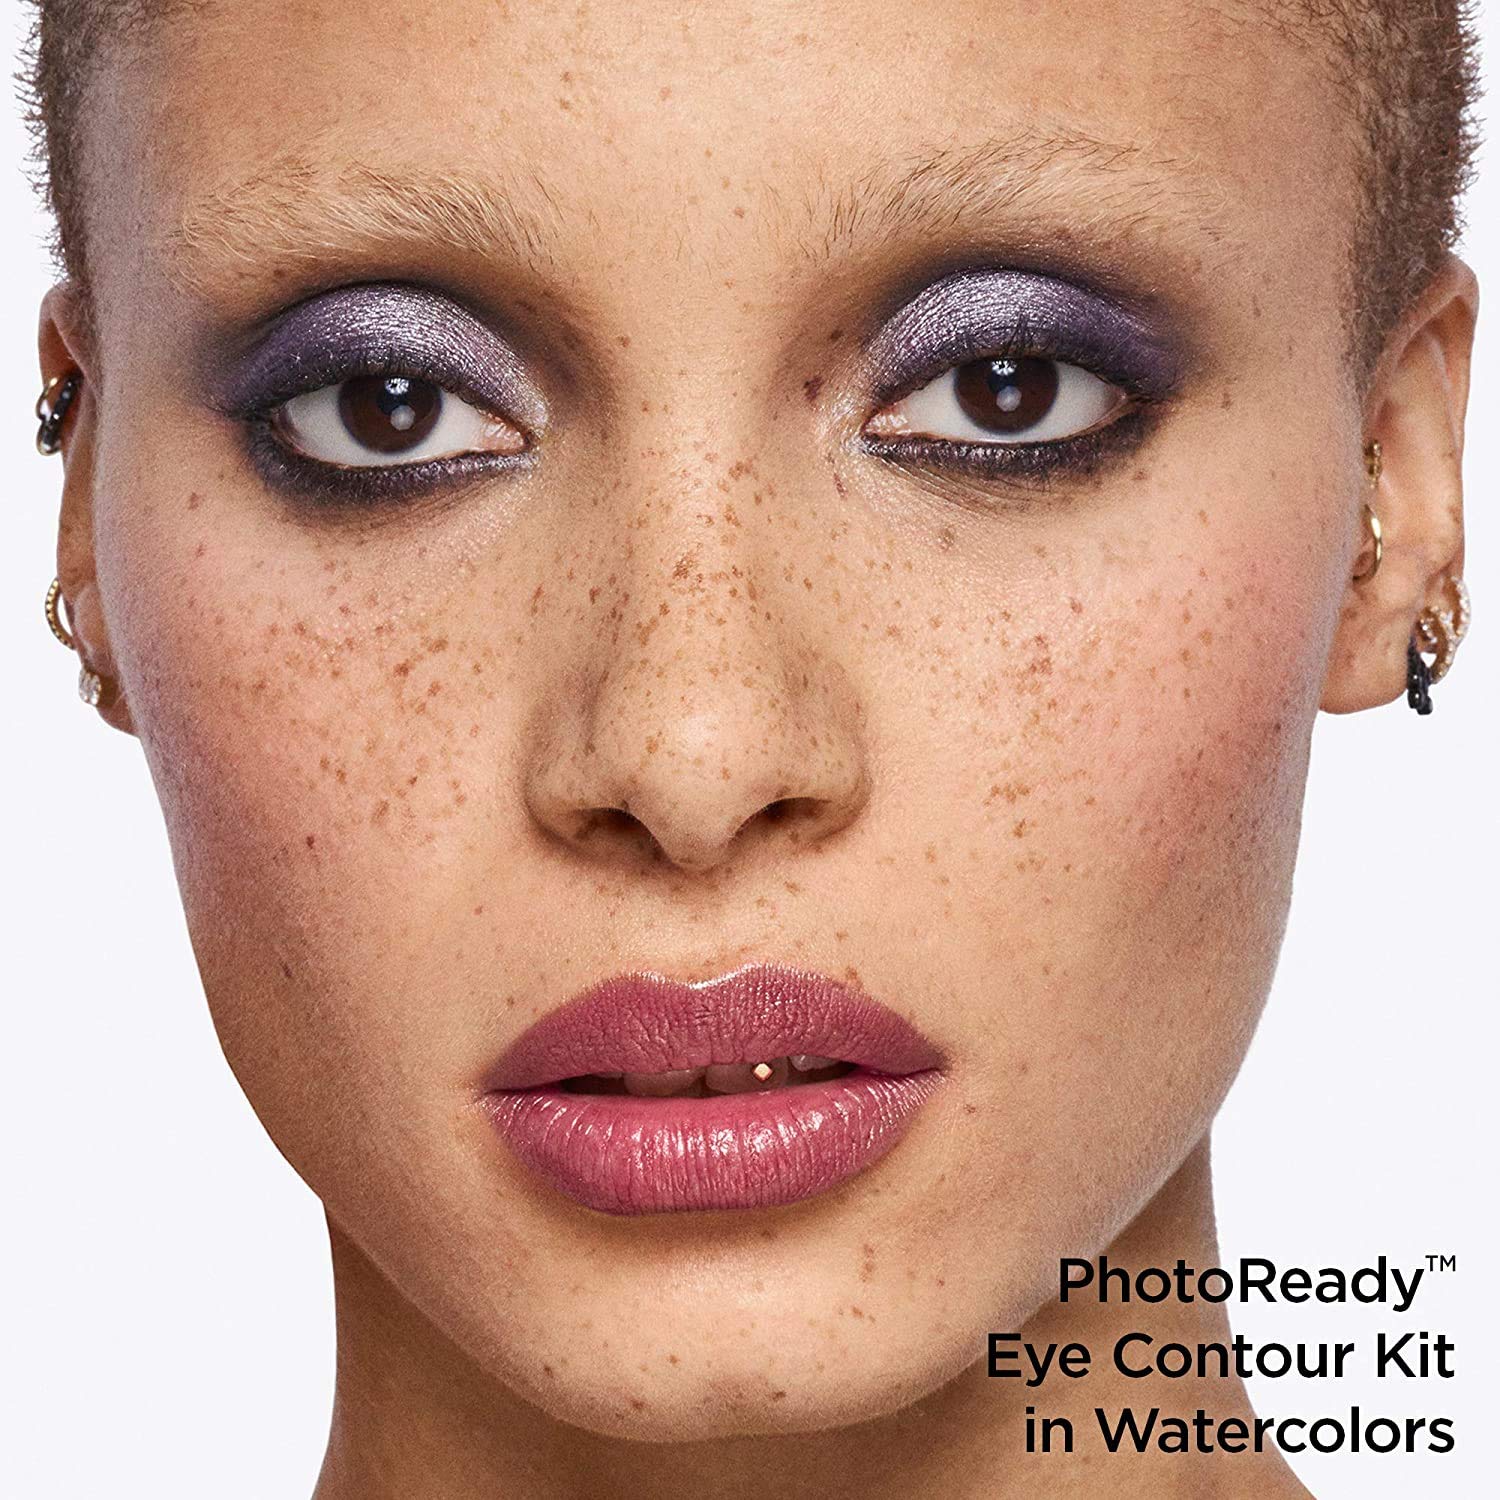  Revlon PhotoReady Eye Contour Kit, Eyeshadow Palette with 5 Wet/Dry Shades & Double-Ended Brush Applicator, Metropolitan (501), 0.1oz